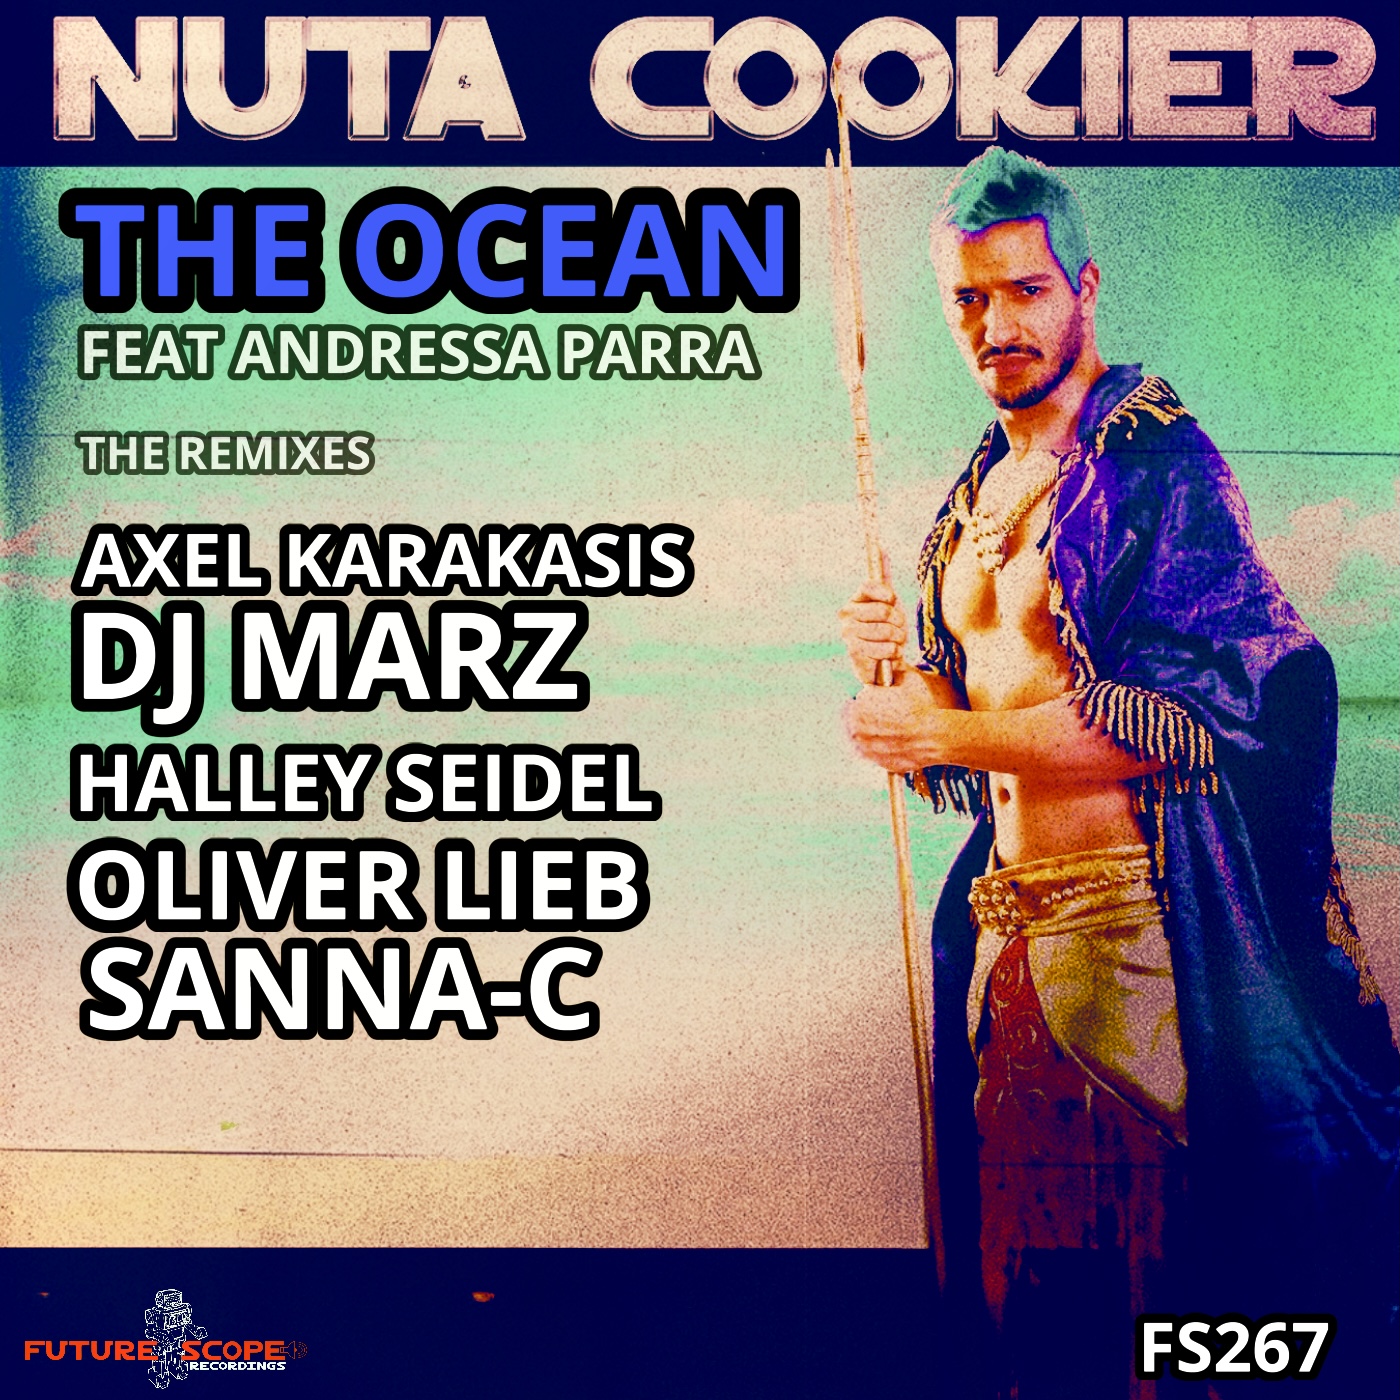 “The Ocean” by Nuta Cookier feat. Andressa Parra gets 7 new remixes